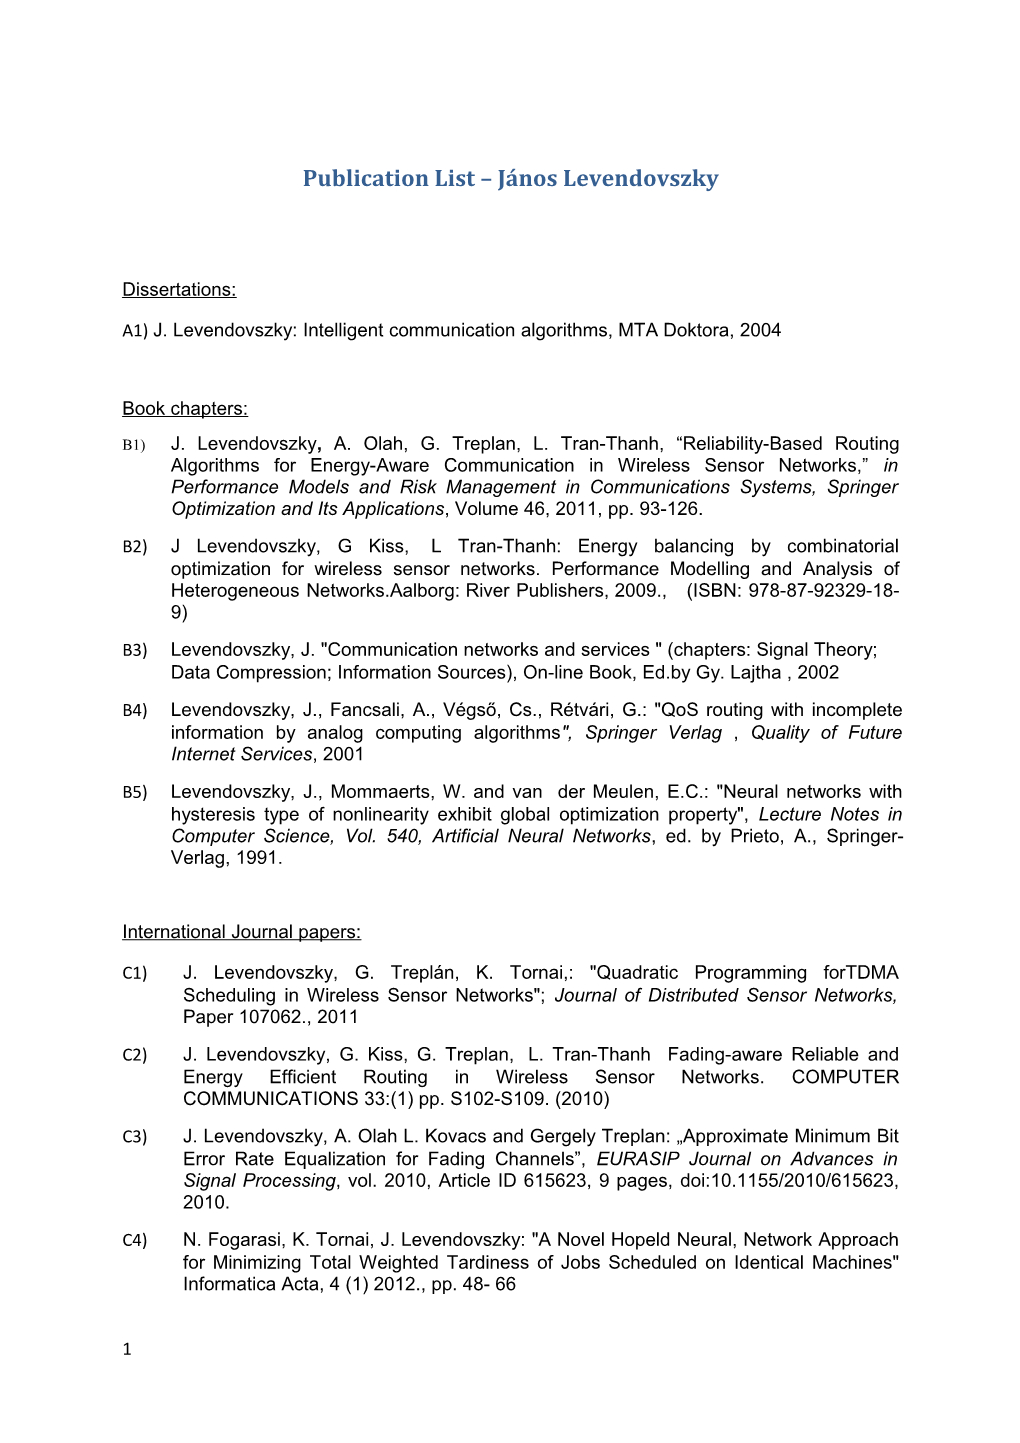 Publication List János Levendovszky